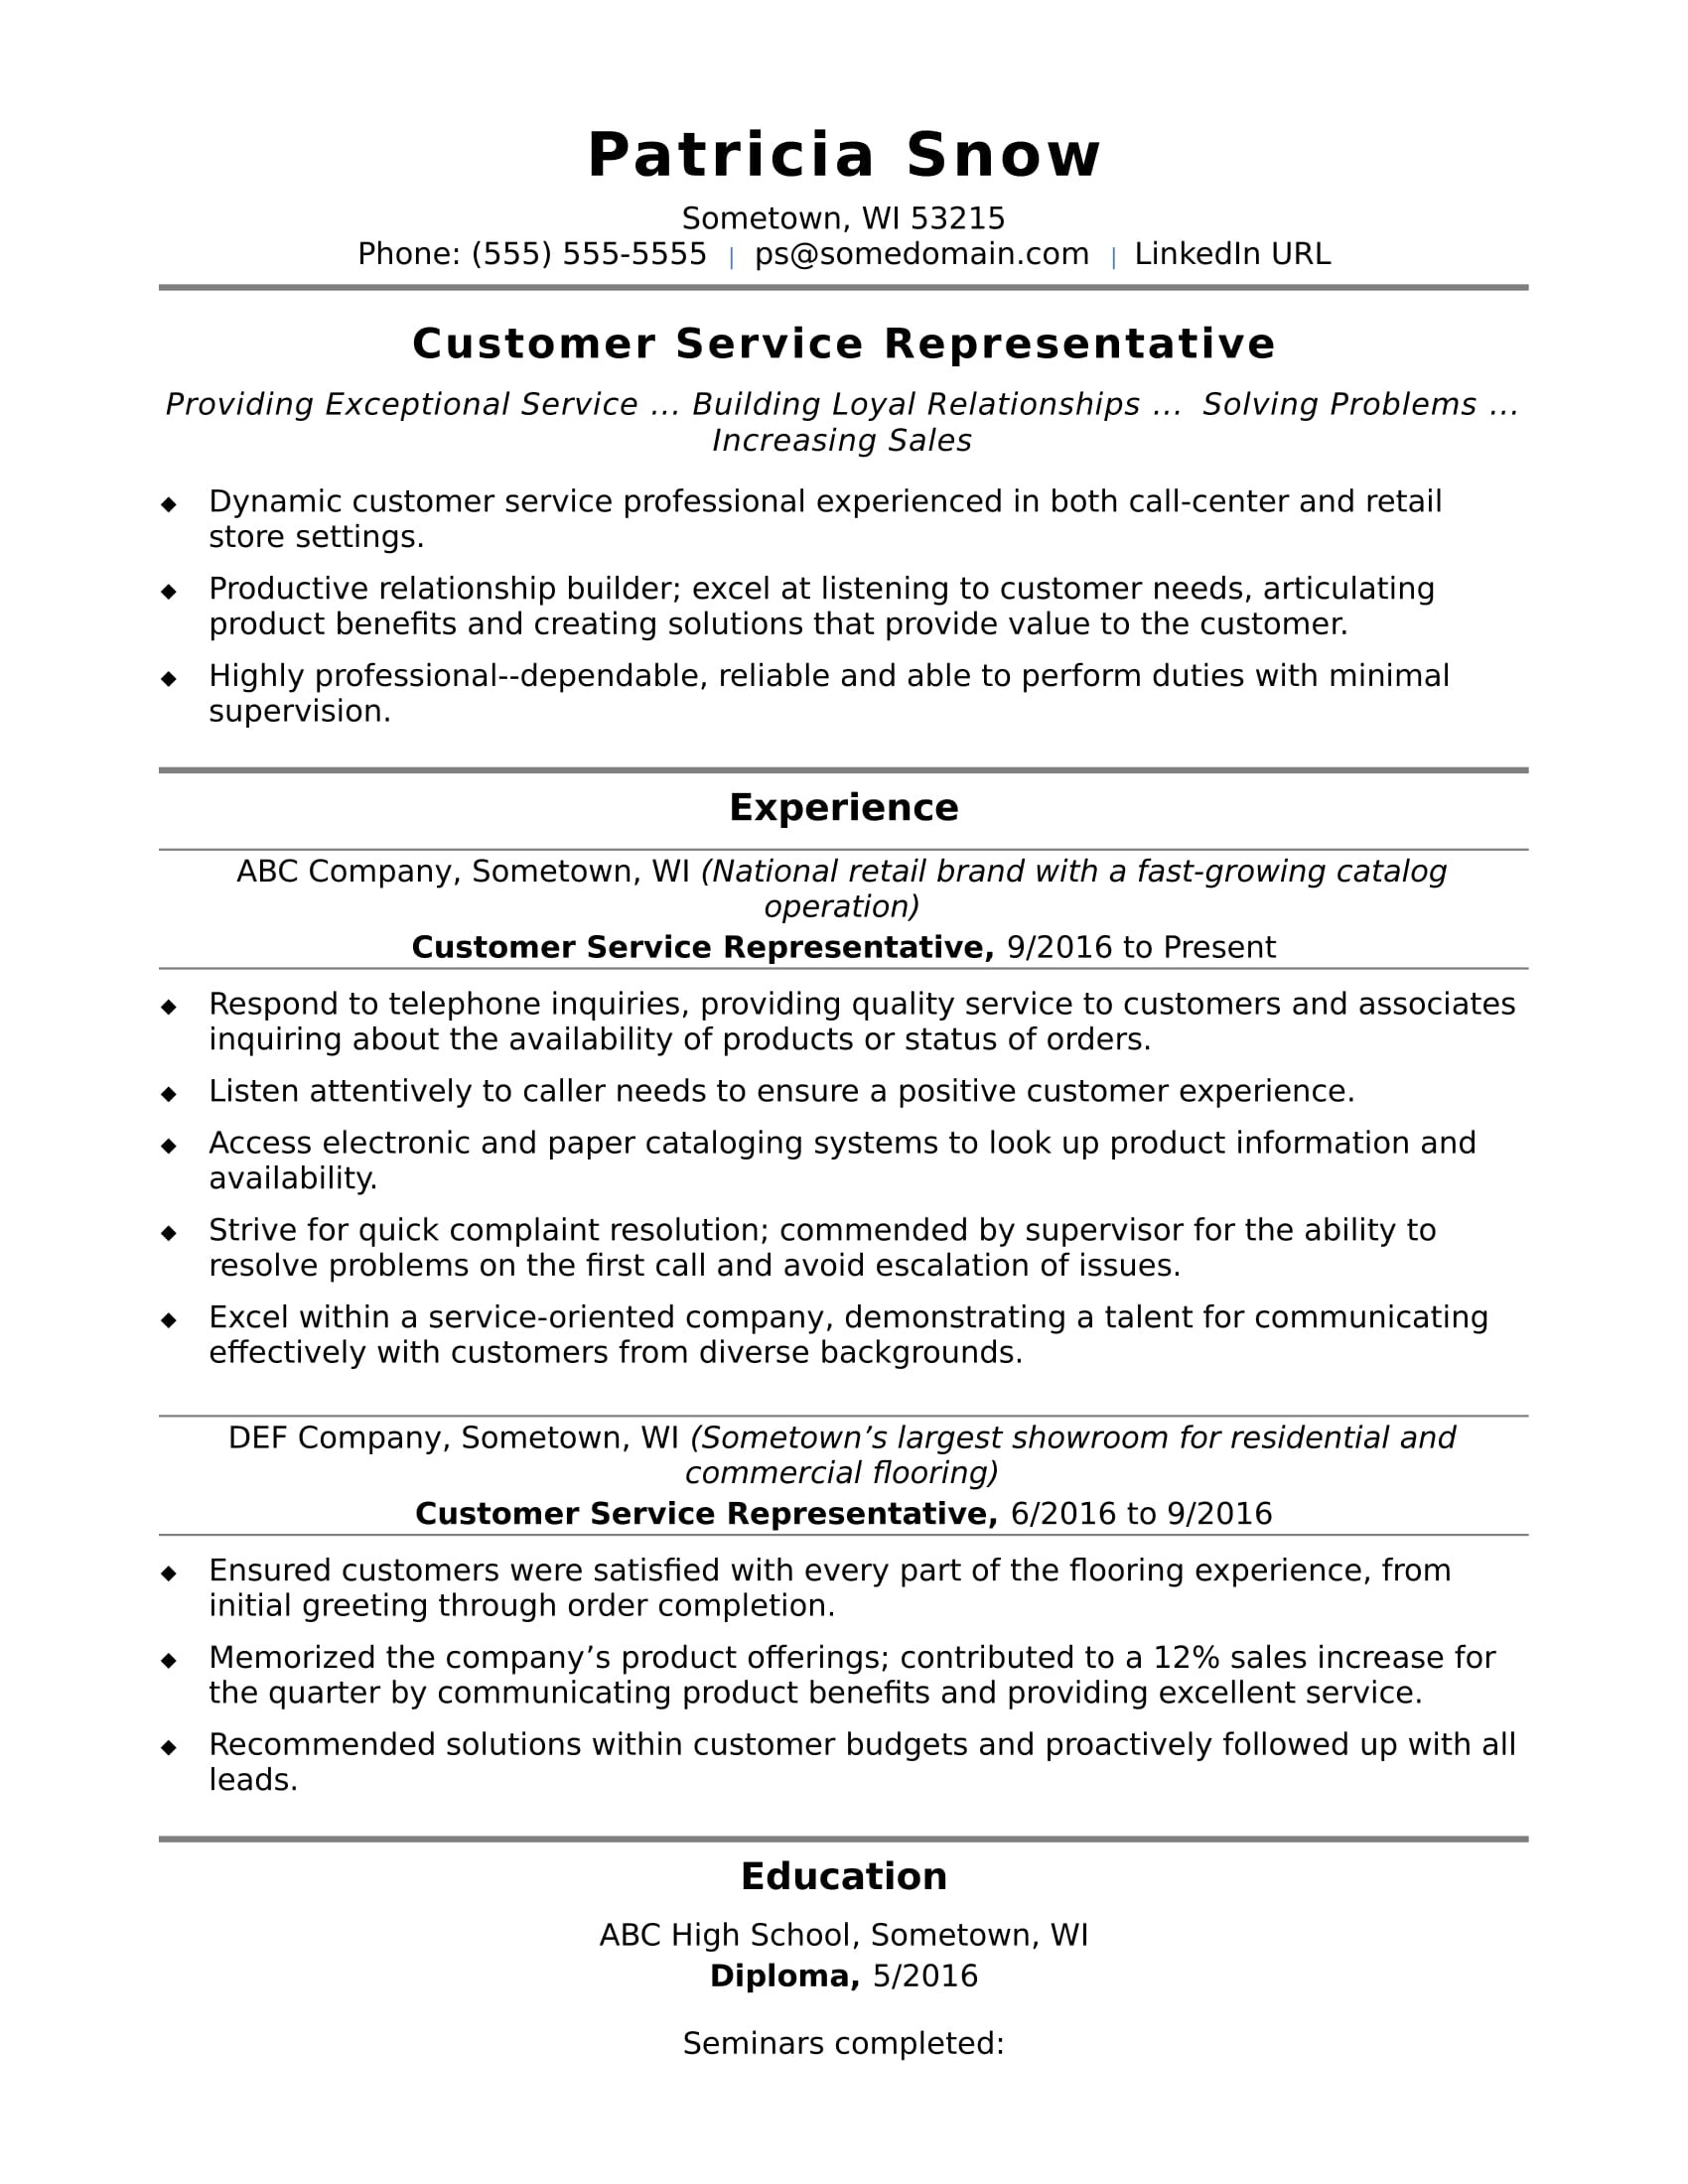 Free Customer Service Representative Resume Template Customer Service Representative Resume Sample Monster.com